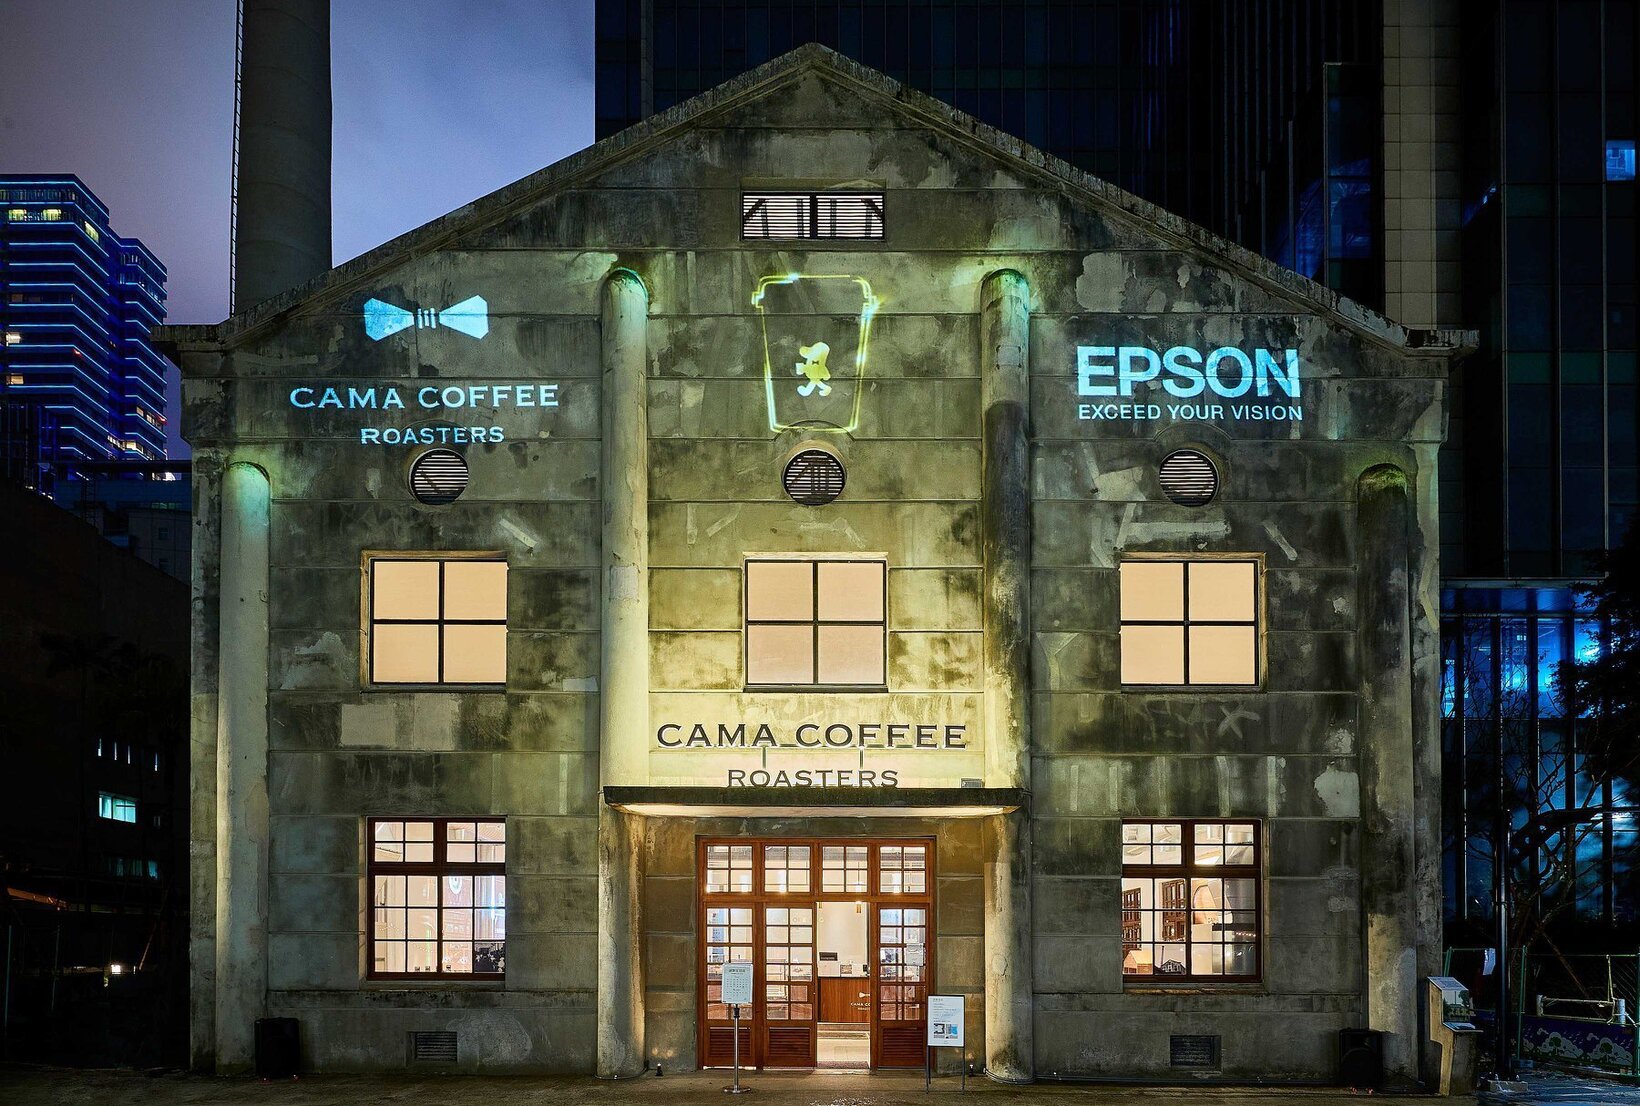 EPSON 與 cama cafe及天衍互動合作，在 cama cafe 旗艦店「CAMA COFFEE ROASTERS 豆留文青」打造光雕投影。（圖片來源：EPSON ）